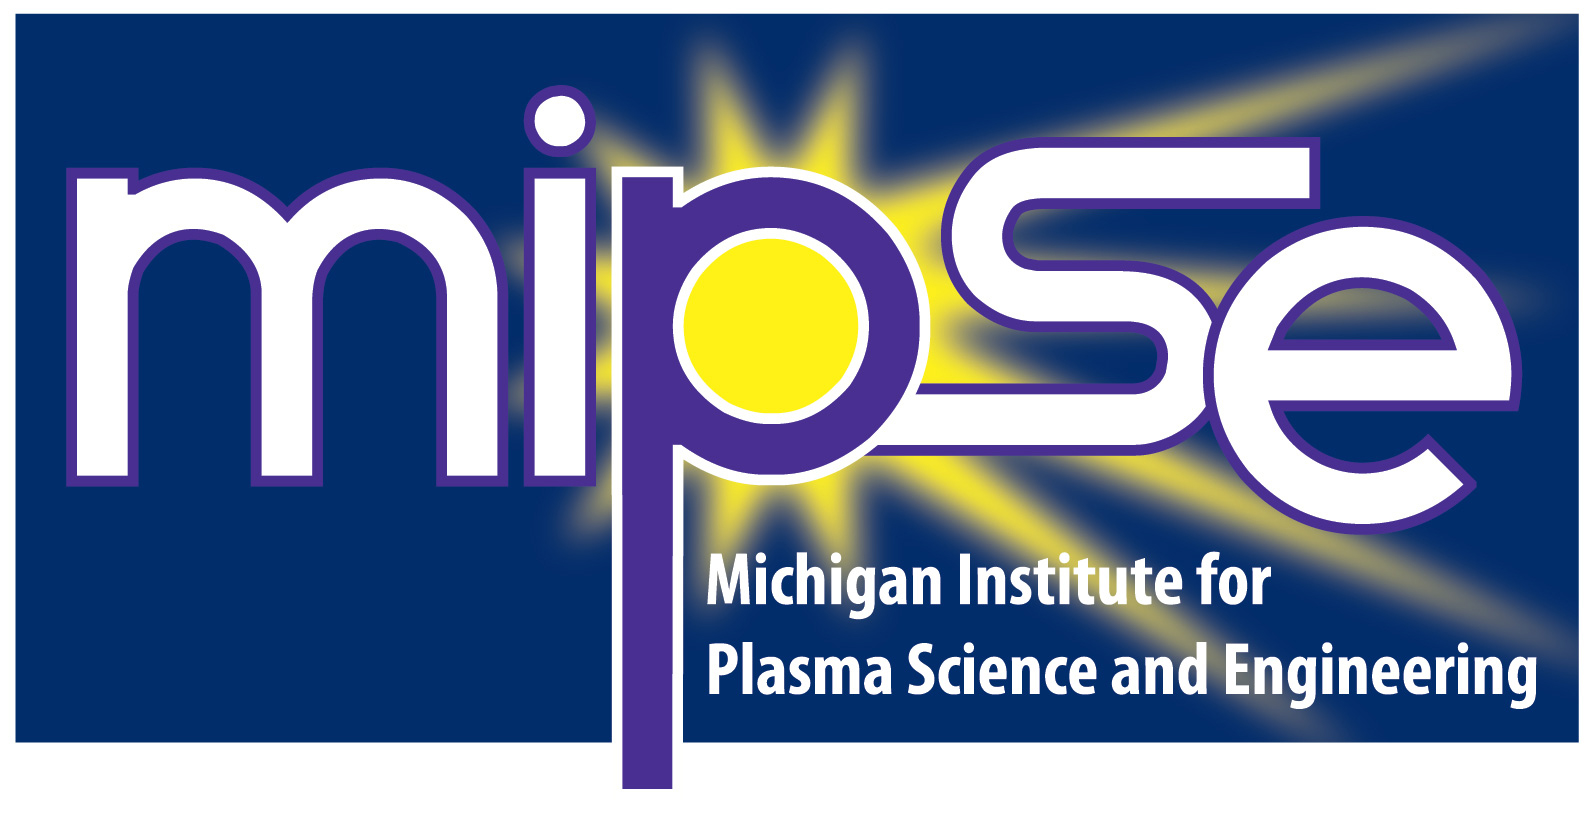 MIPSE logo in JPEG format